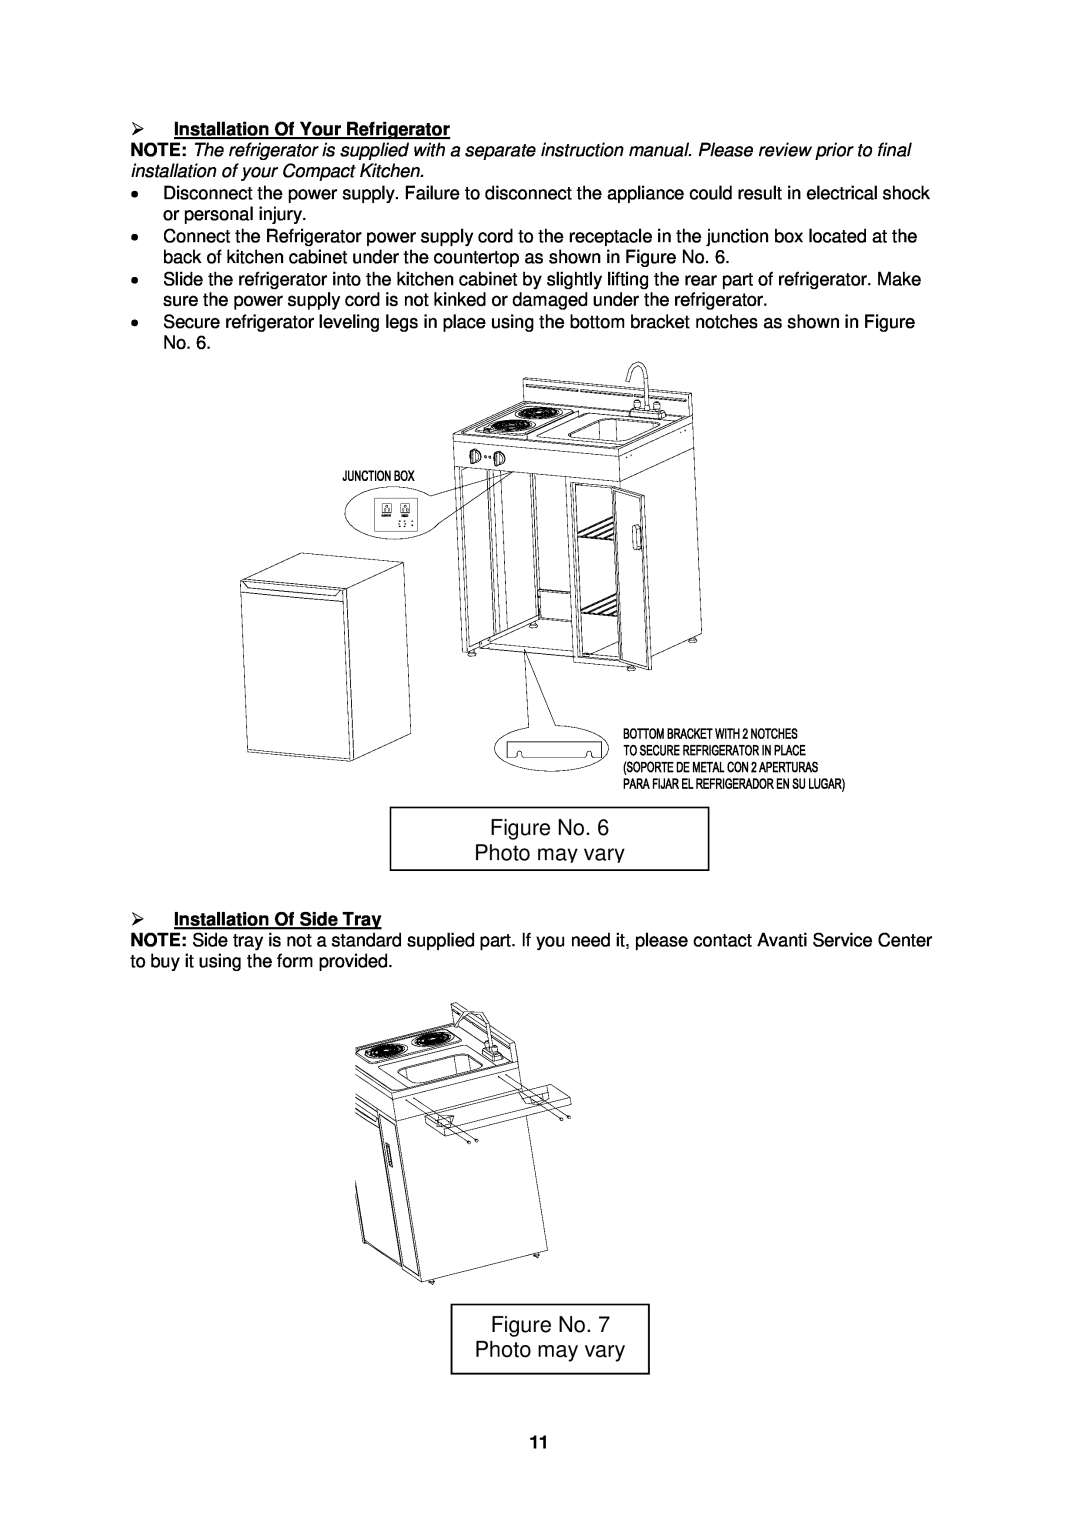 Avanti CK3016 instruction manual Figure No. Photo may vary, Installation Of Your Refrigerator, Installation Of Side Tray 